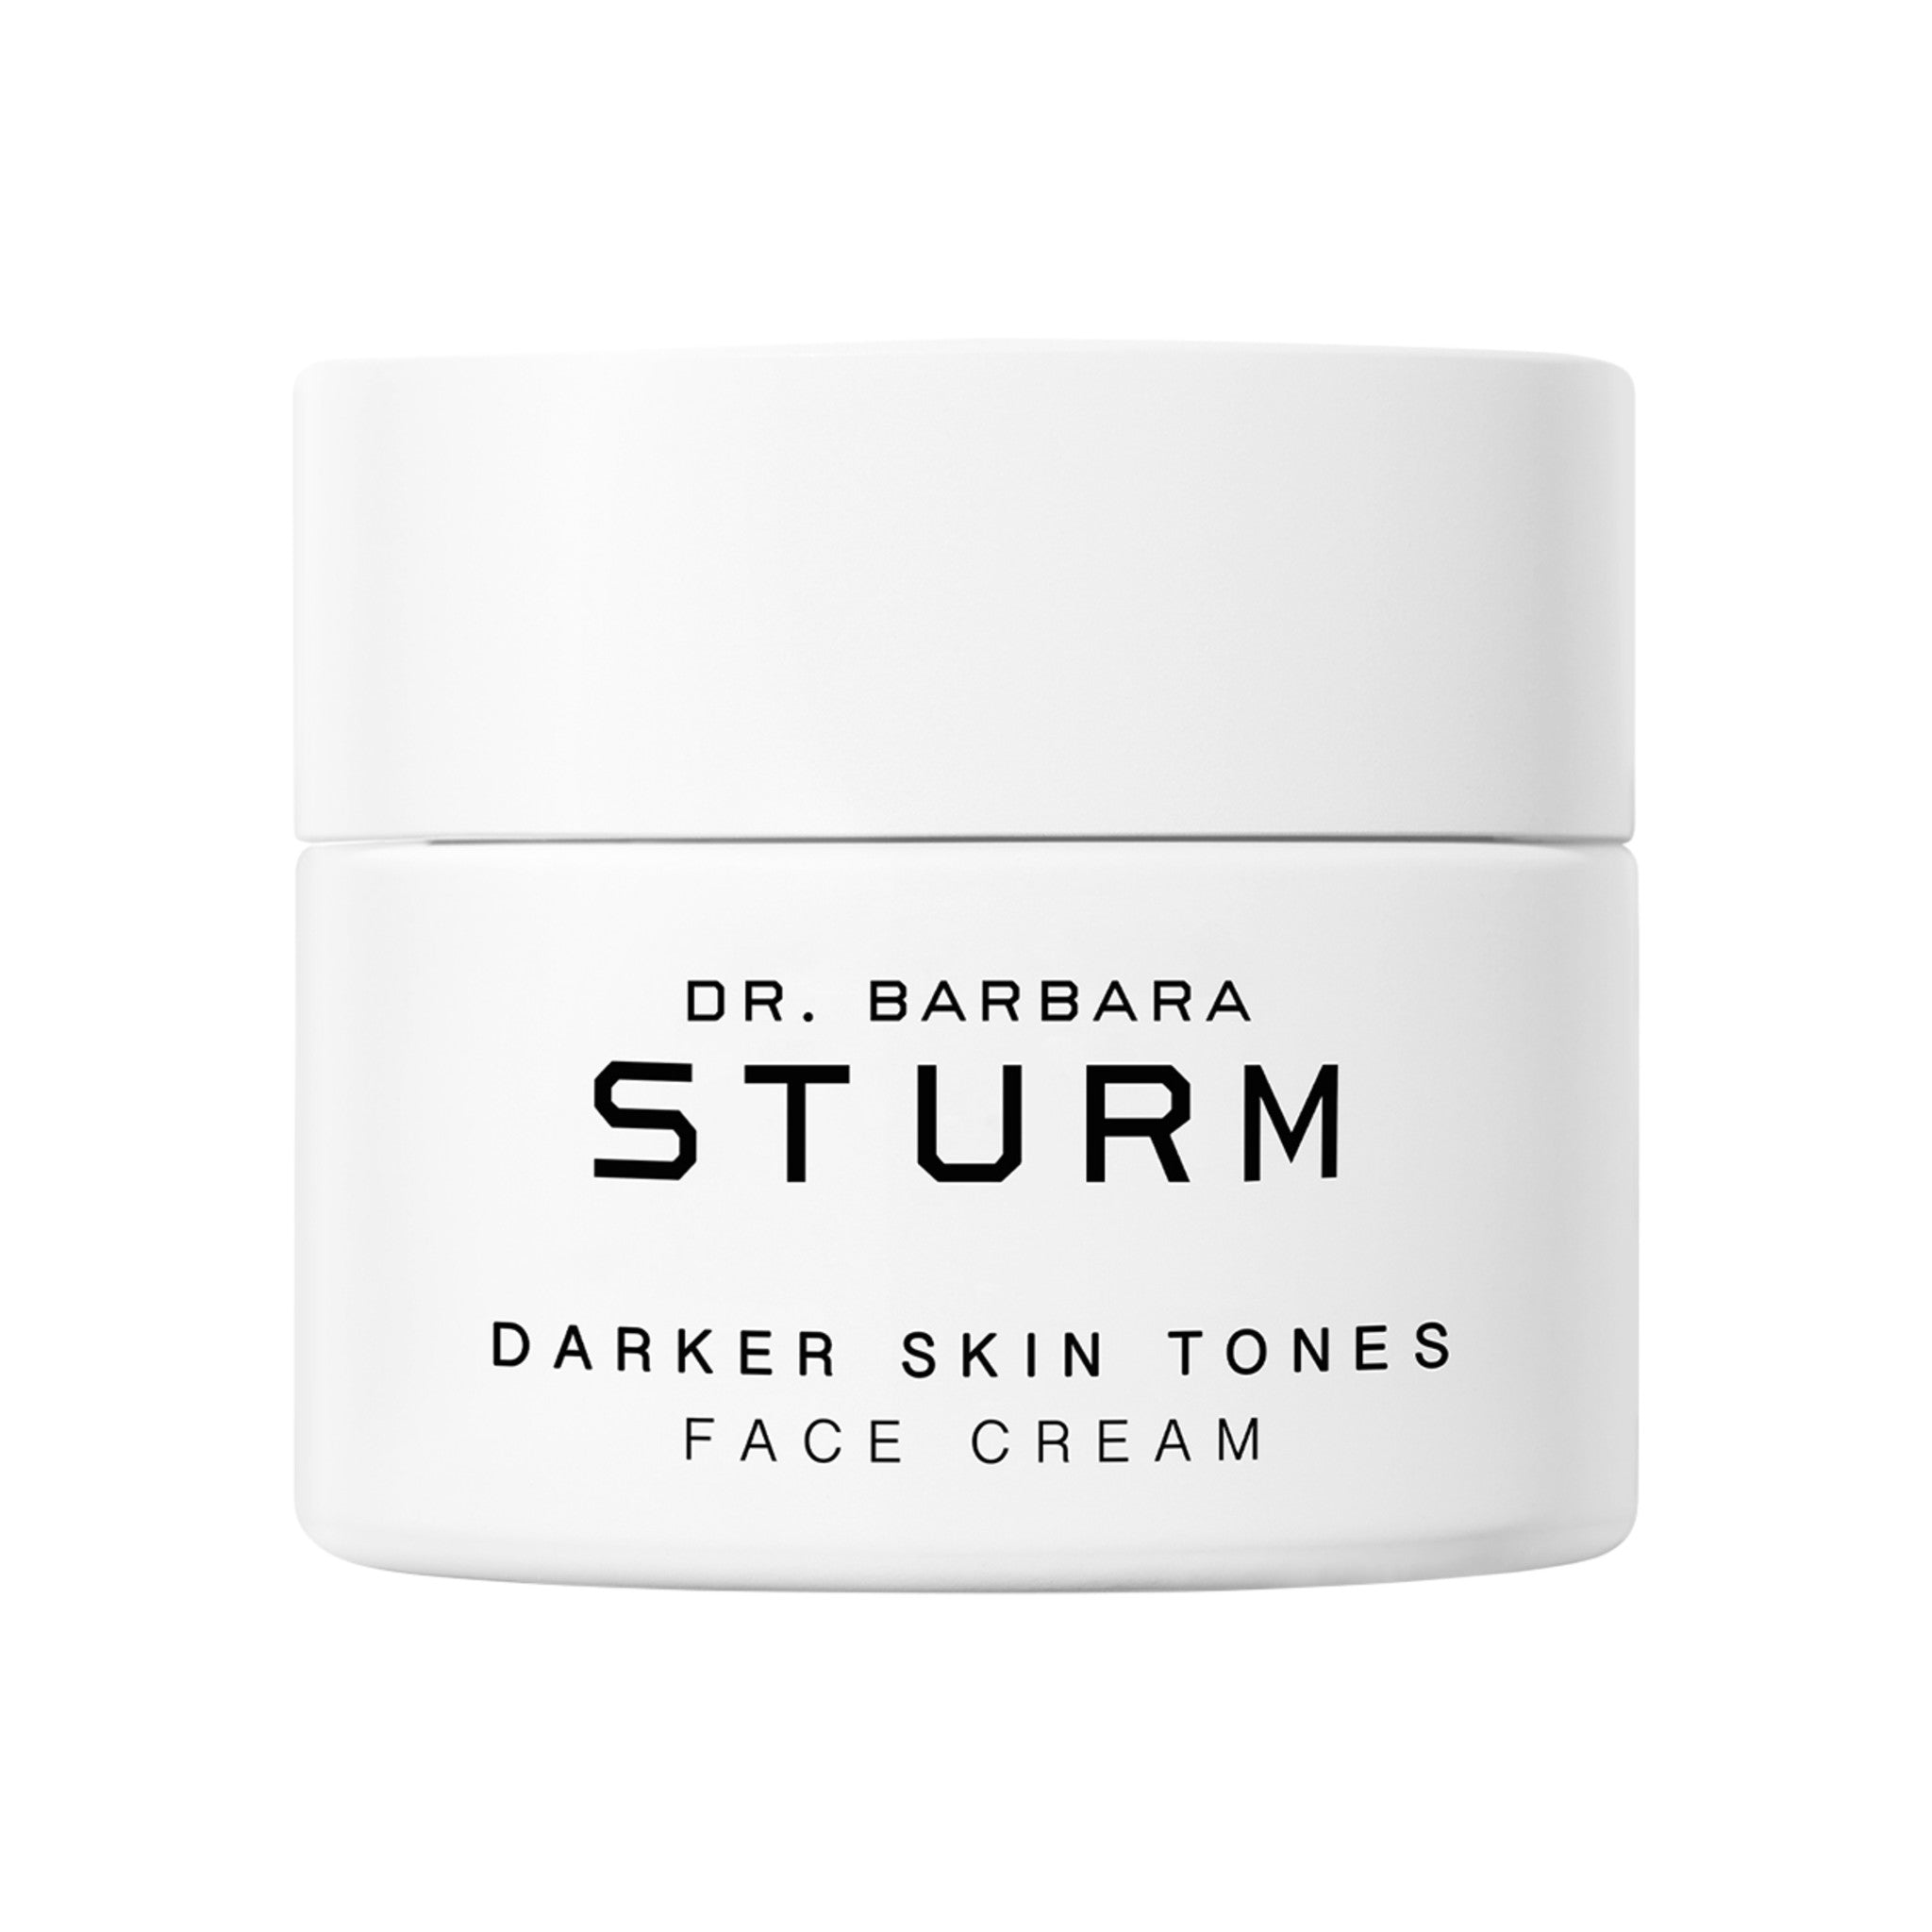 Dr. Barbara Sturm Darker Skin Tones Face Cream main image.